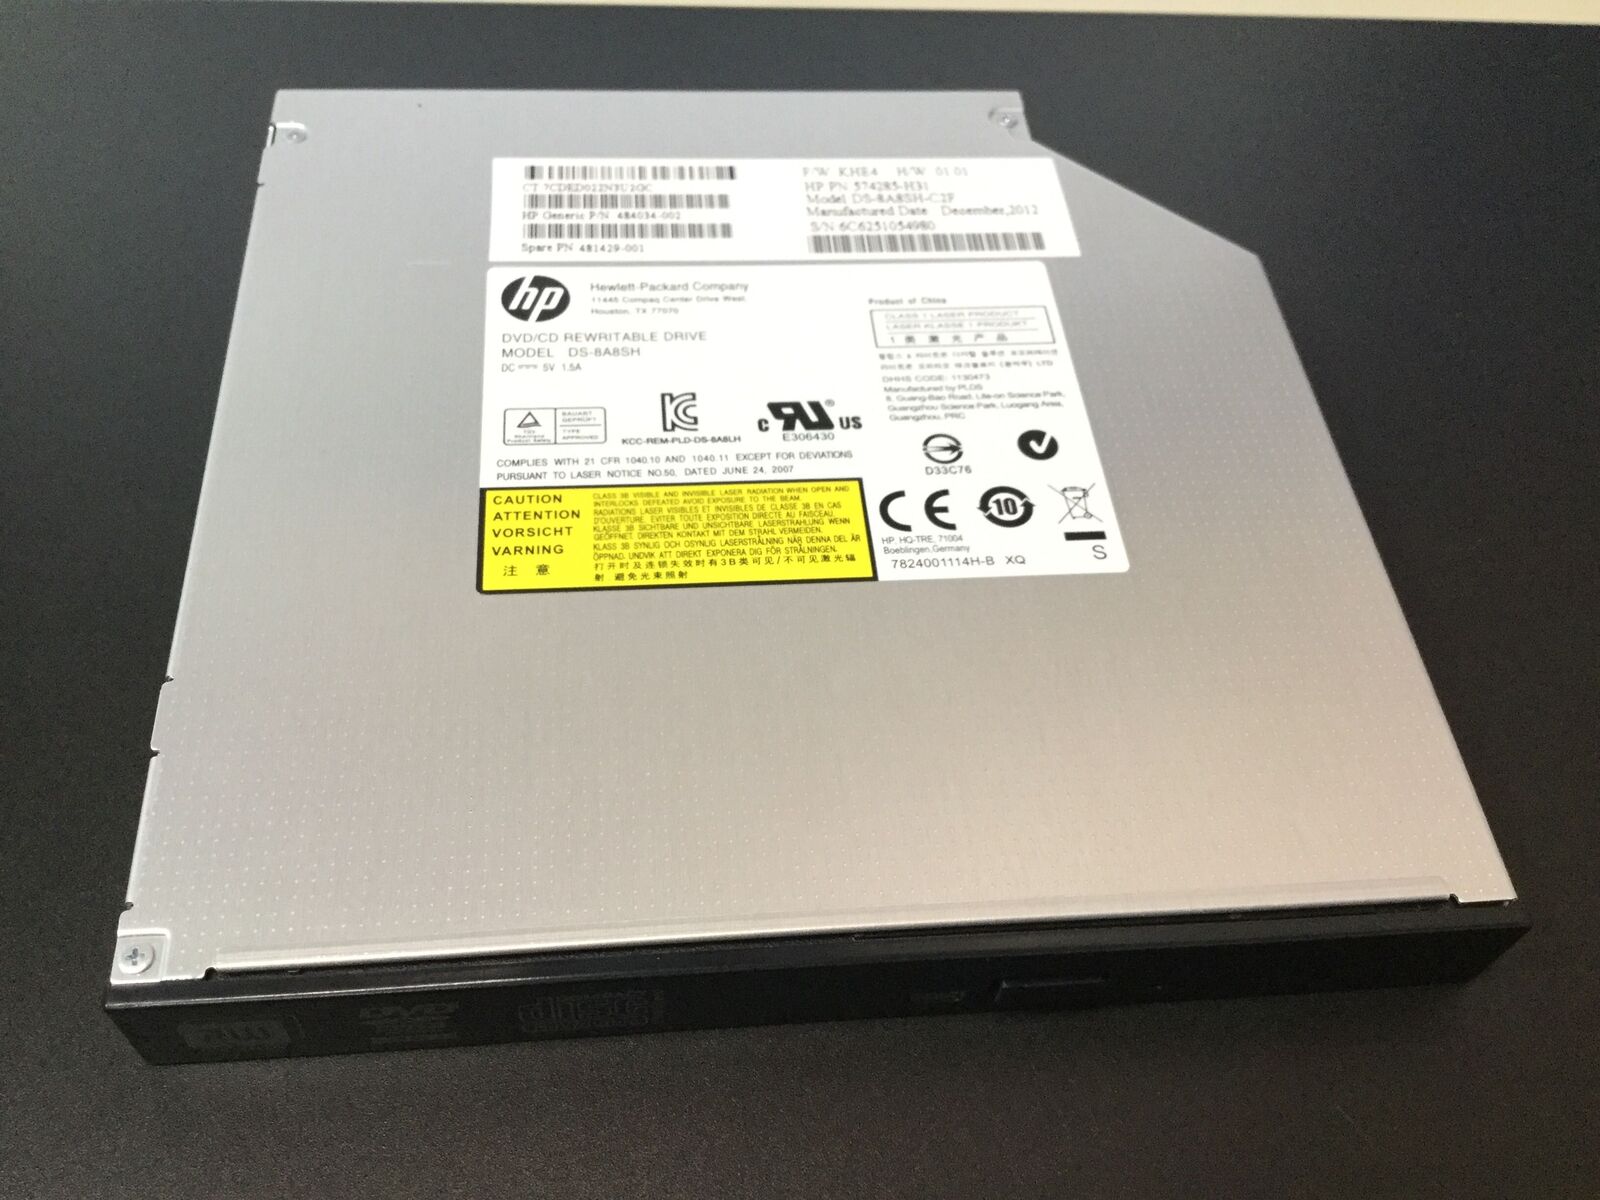 HP 481429-001 DVD-RW slimline optical disk drive - SATA interface, 12.7mm